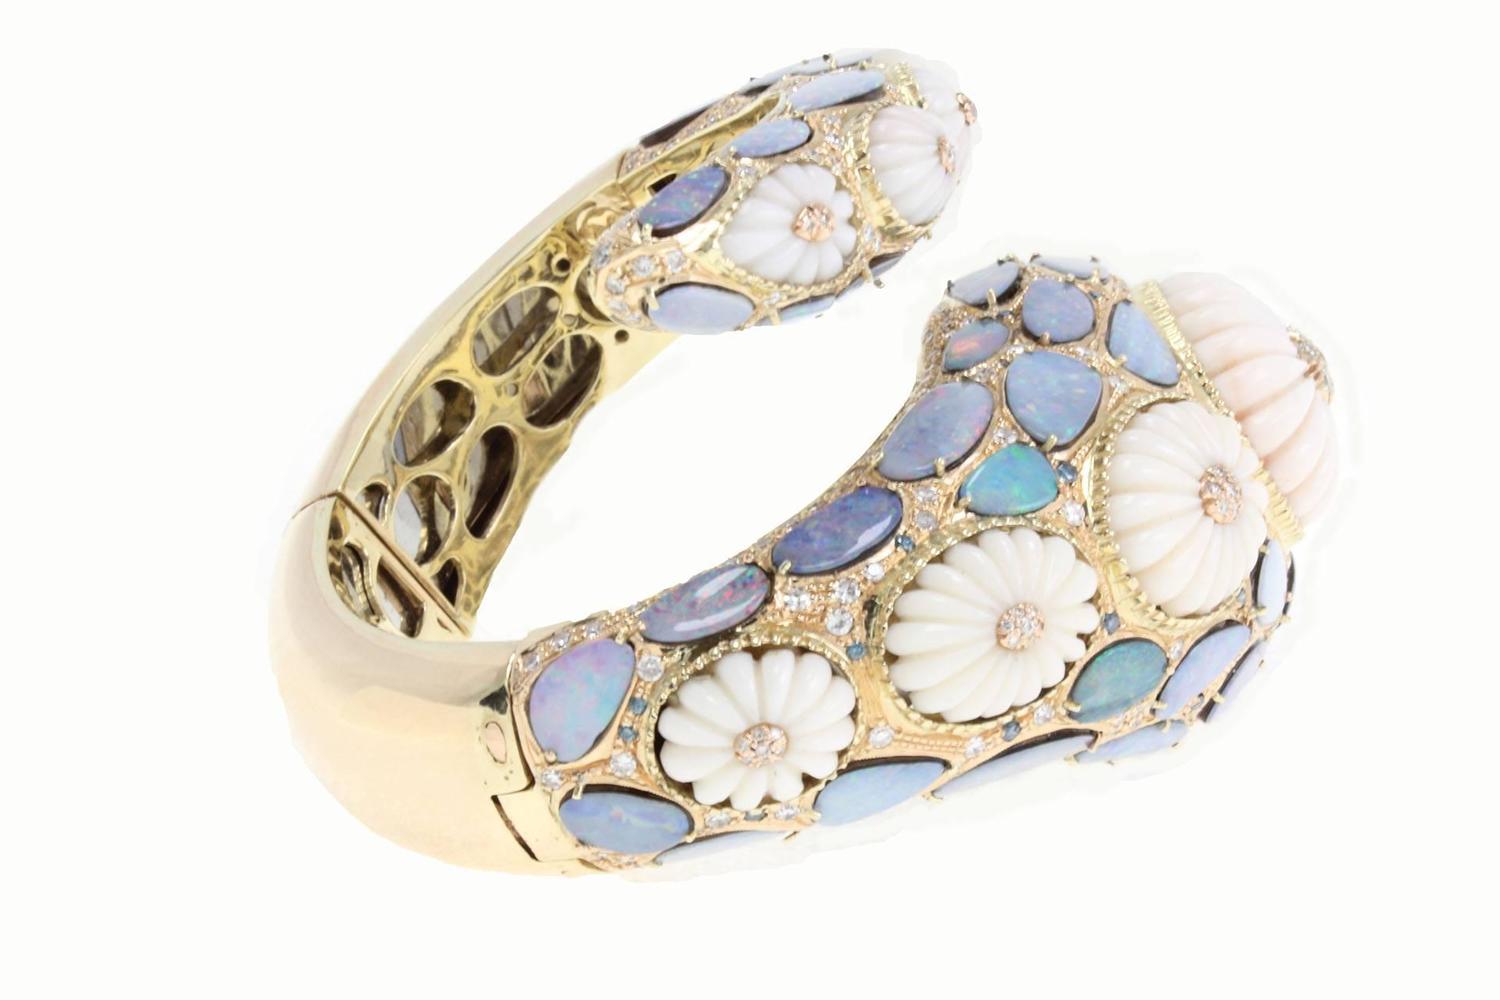 Luise Opal Coral Diamond Gold Snake Bracelet For Sale at 1stdibs